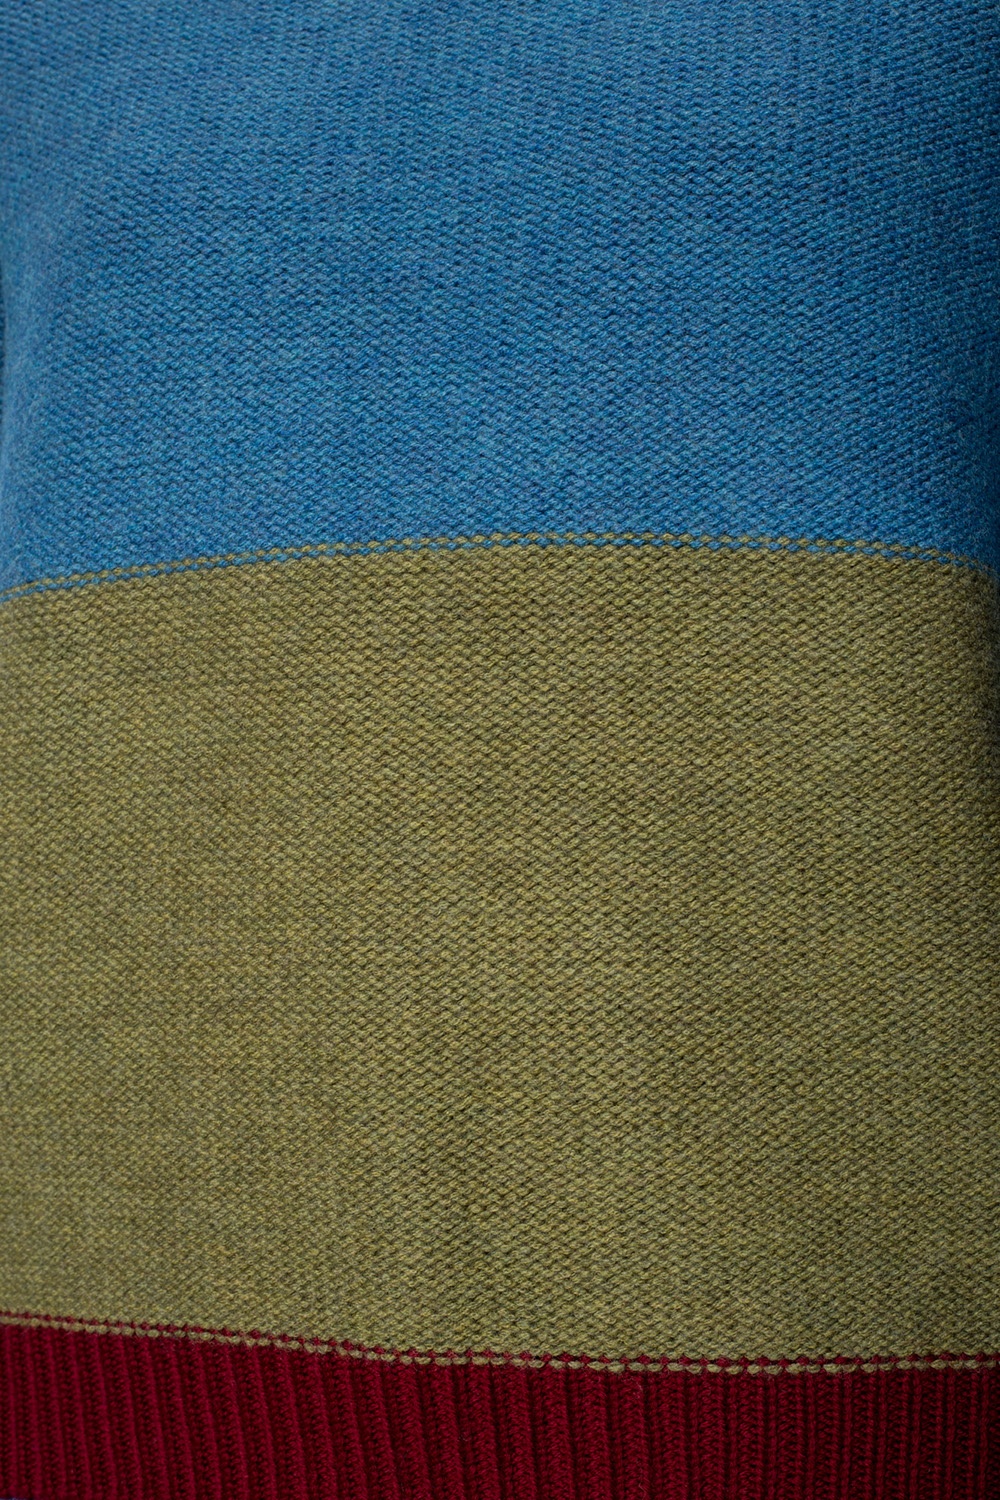 Blue Geometric pattern turtleneck sweater See By Chloé - Vitkac Italy